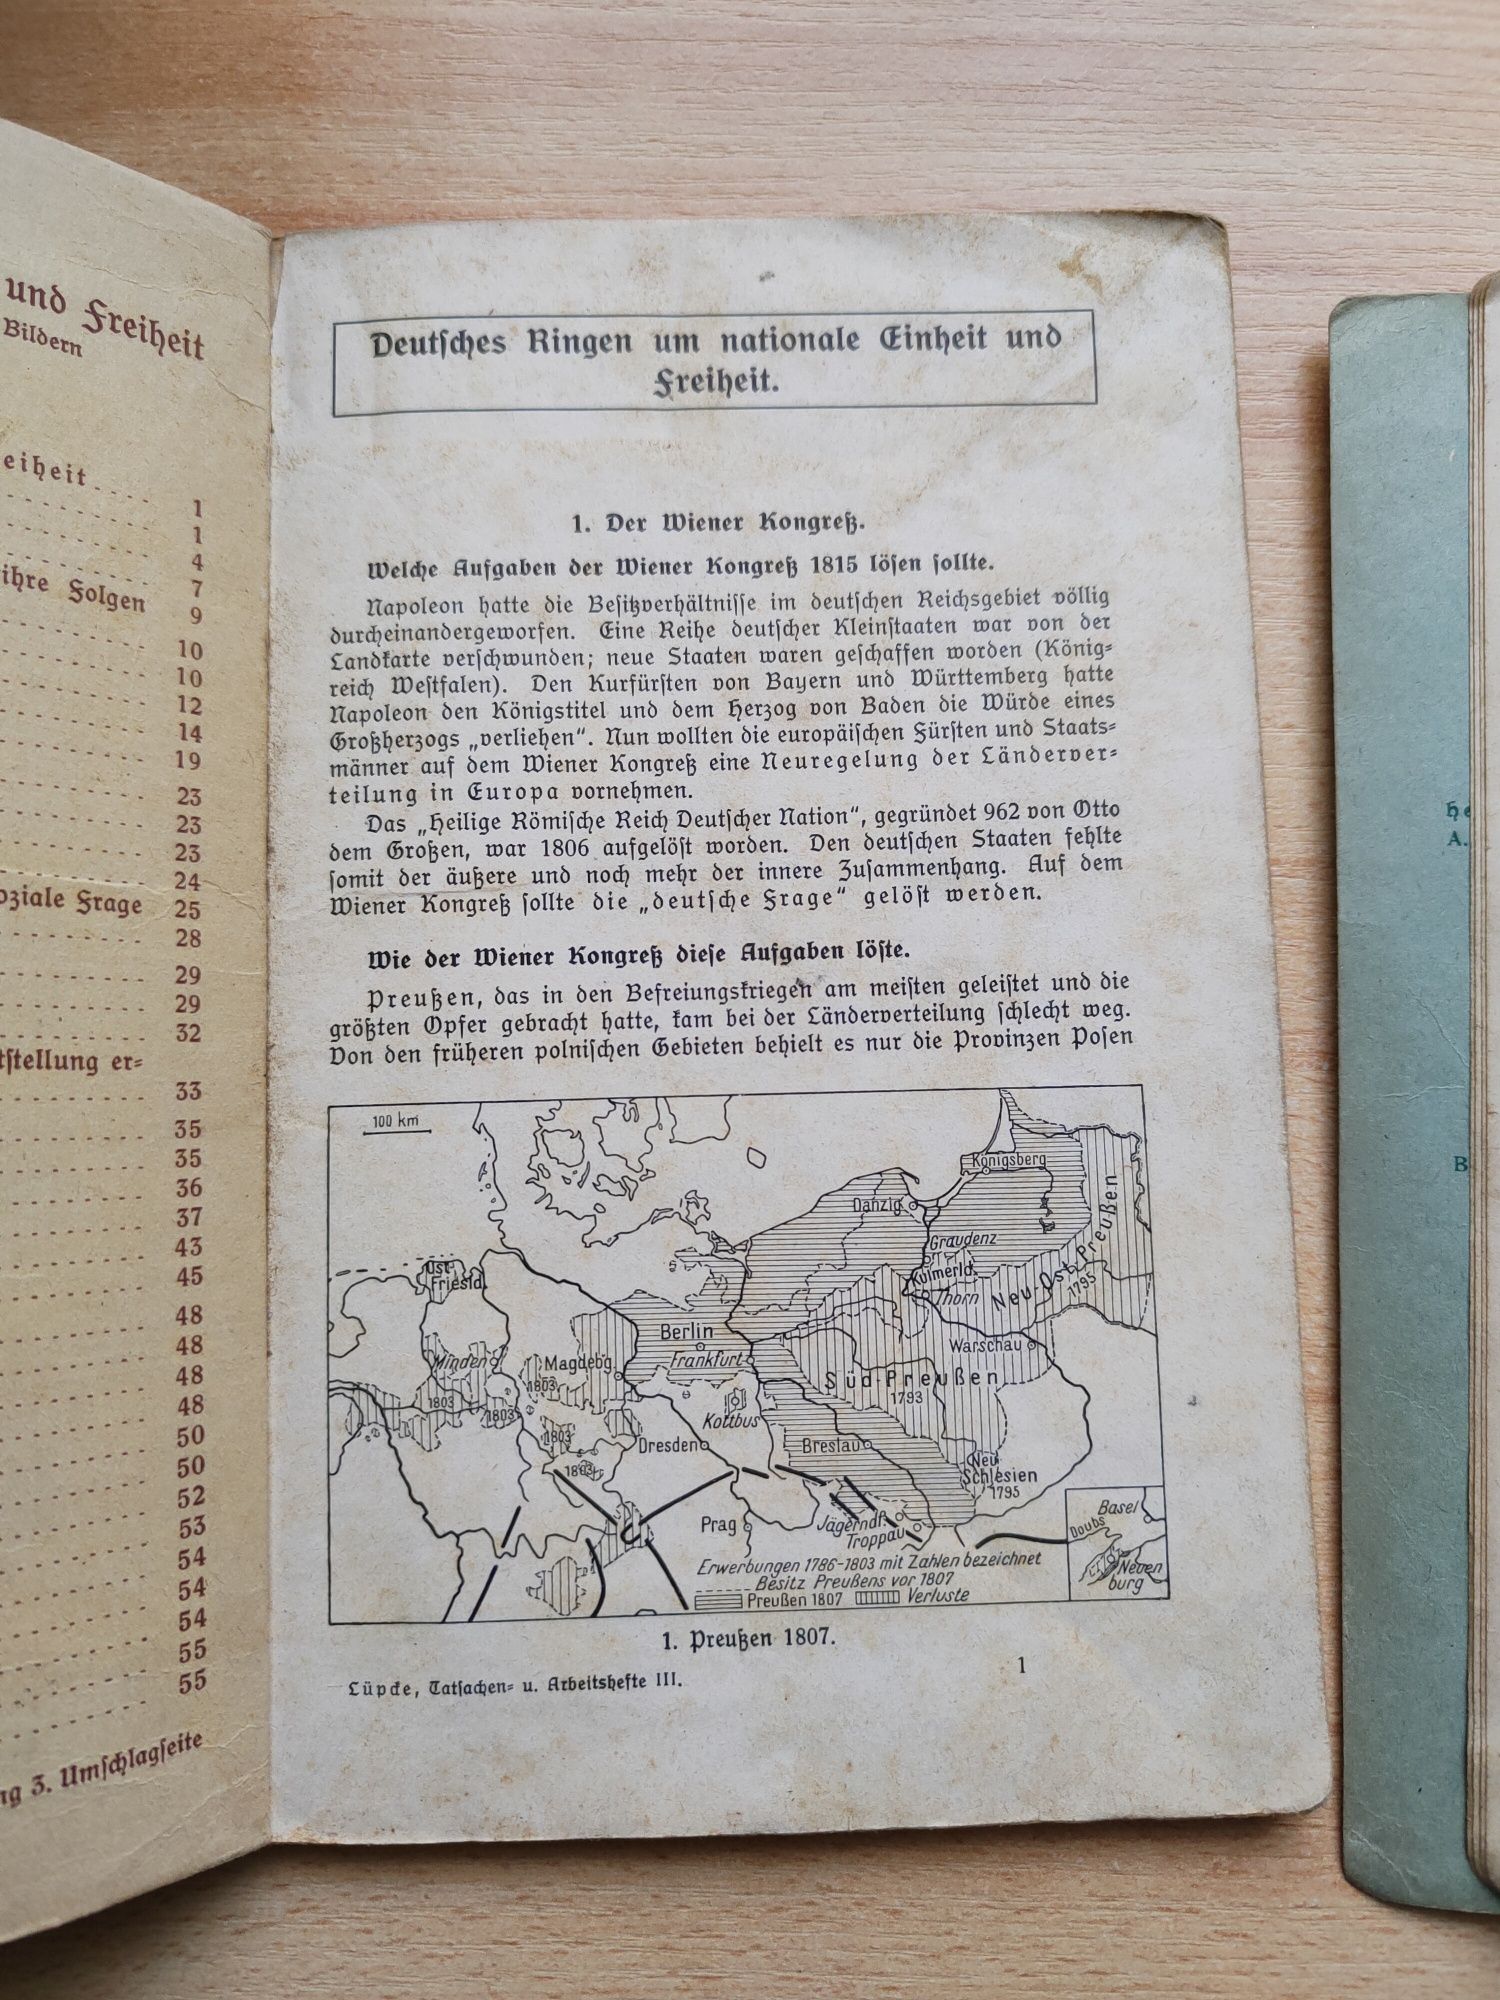 Stare podręczniki książki do nauki historii 1934r.